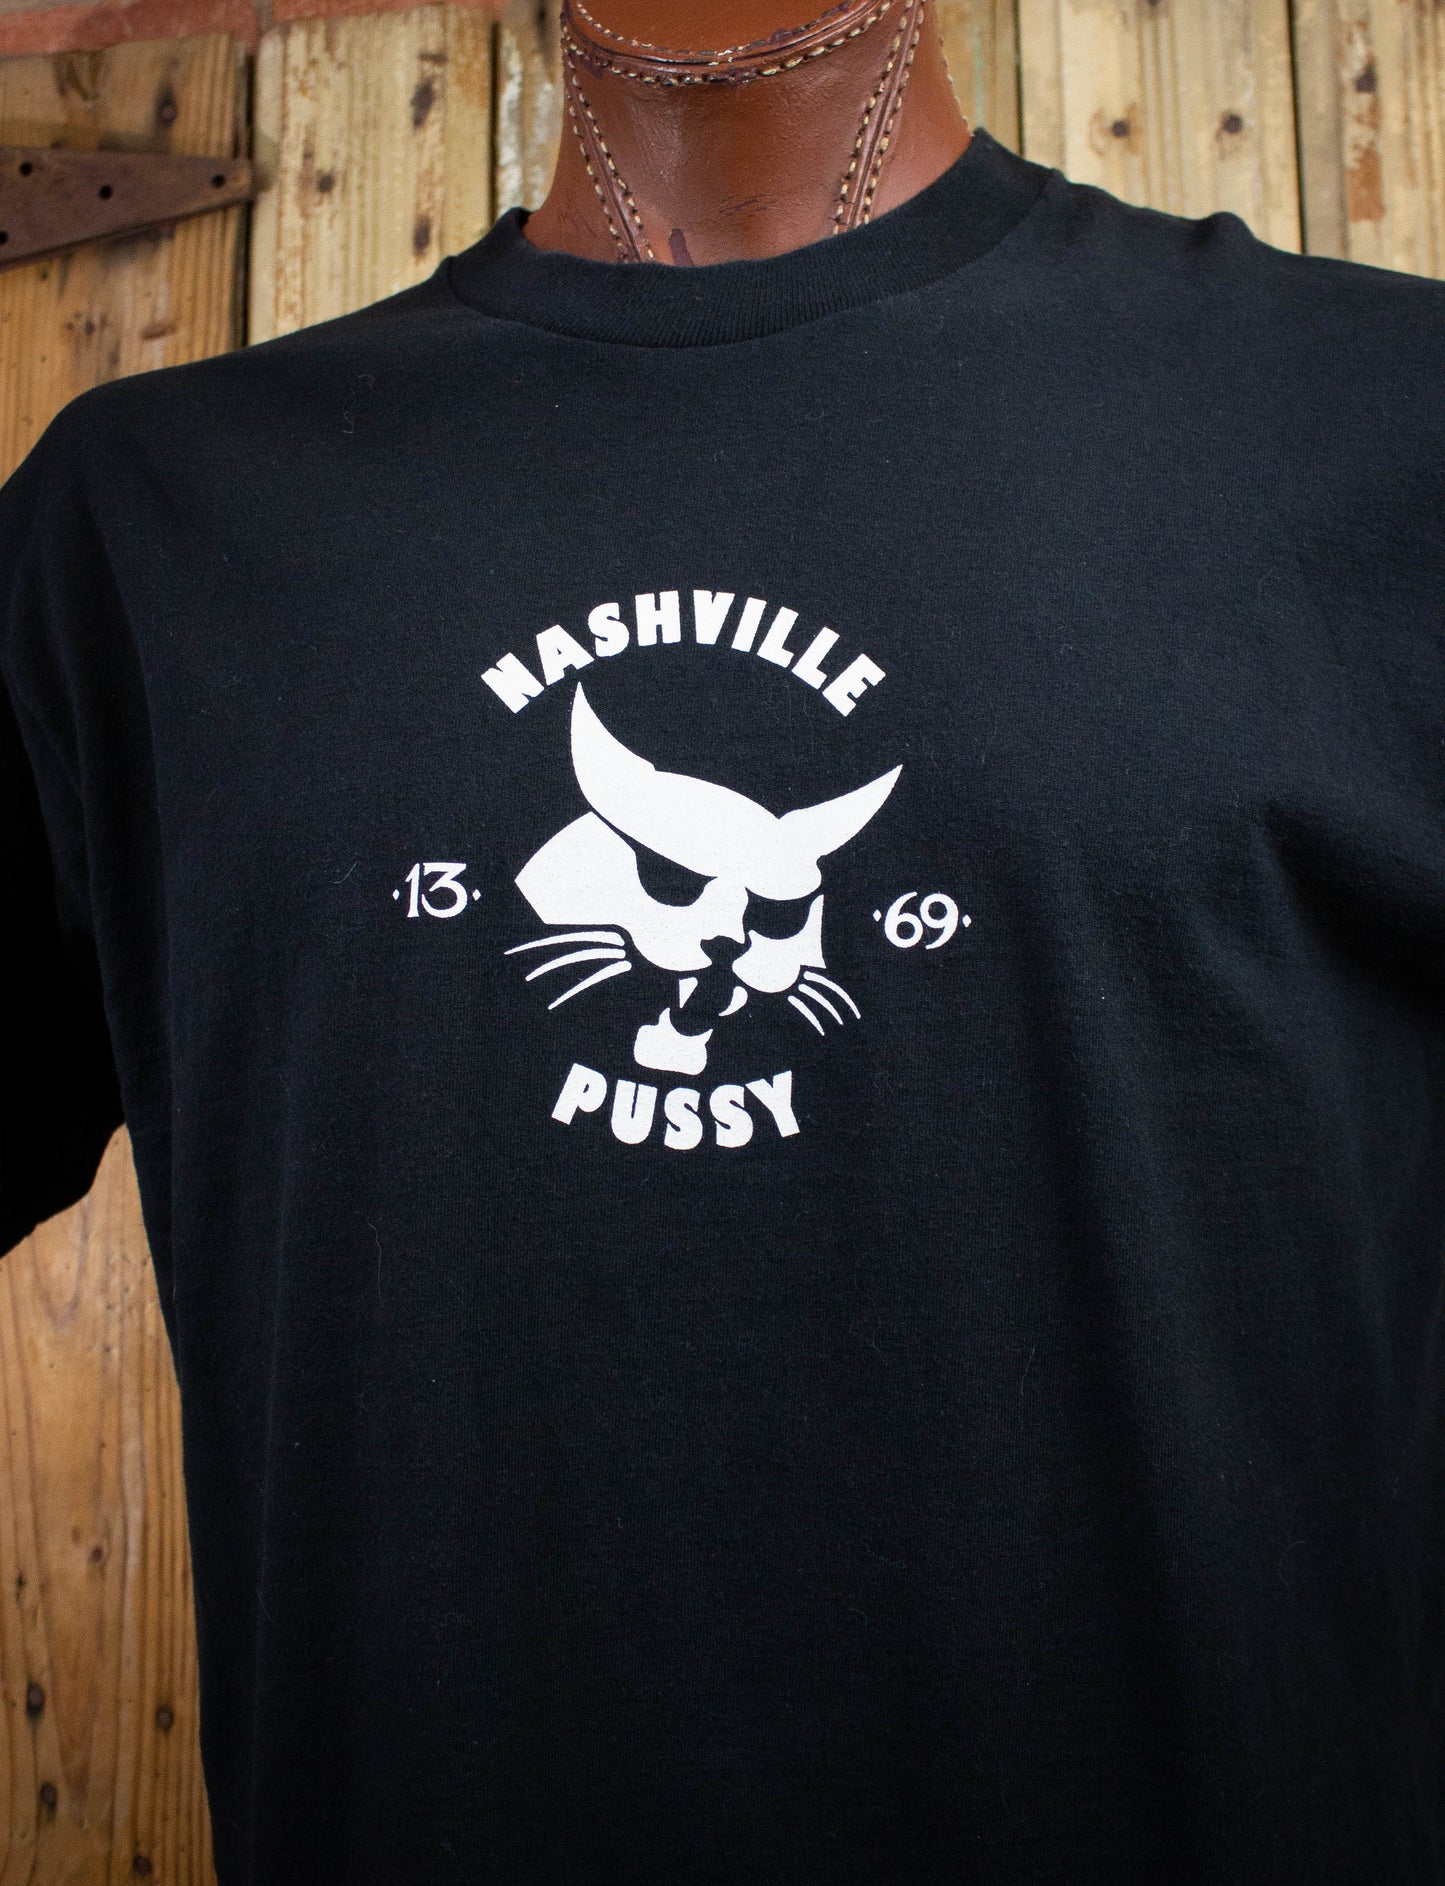 Nashville Pussy 13 69 Cat Logo Concert T Shirt 2000s Black XL